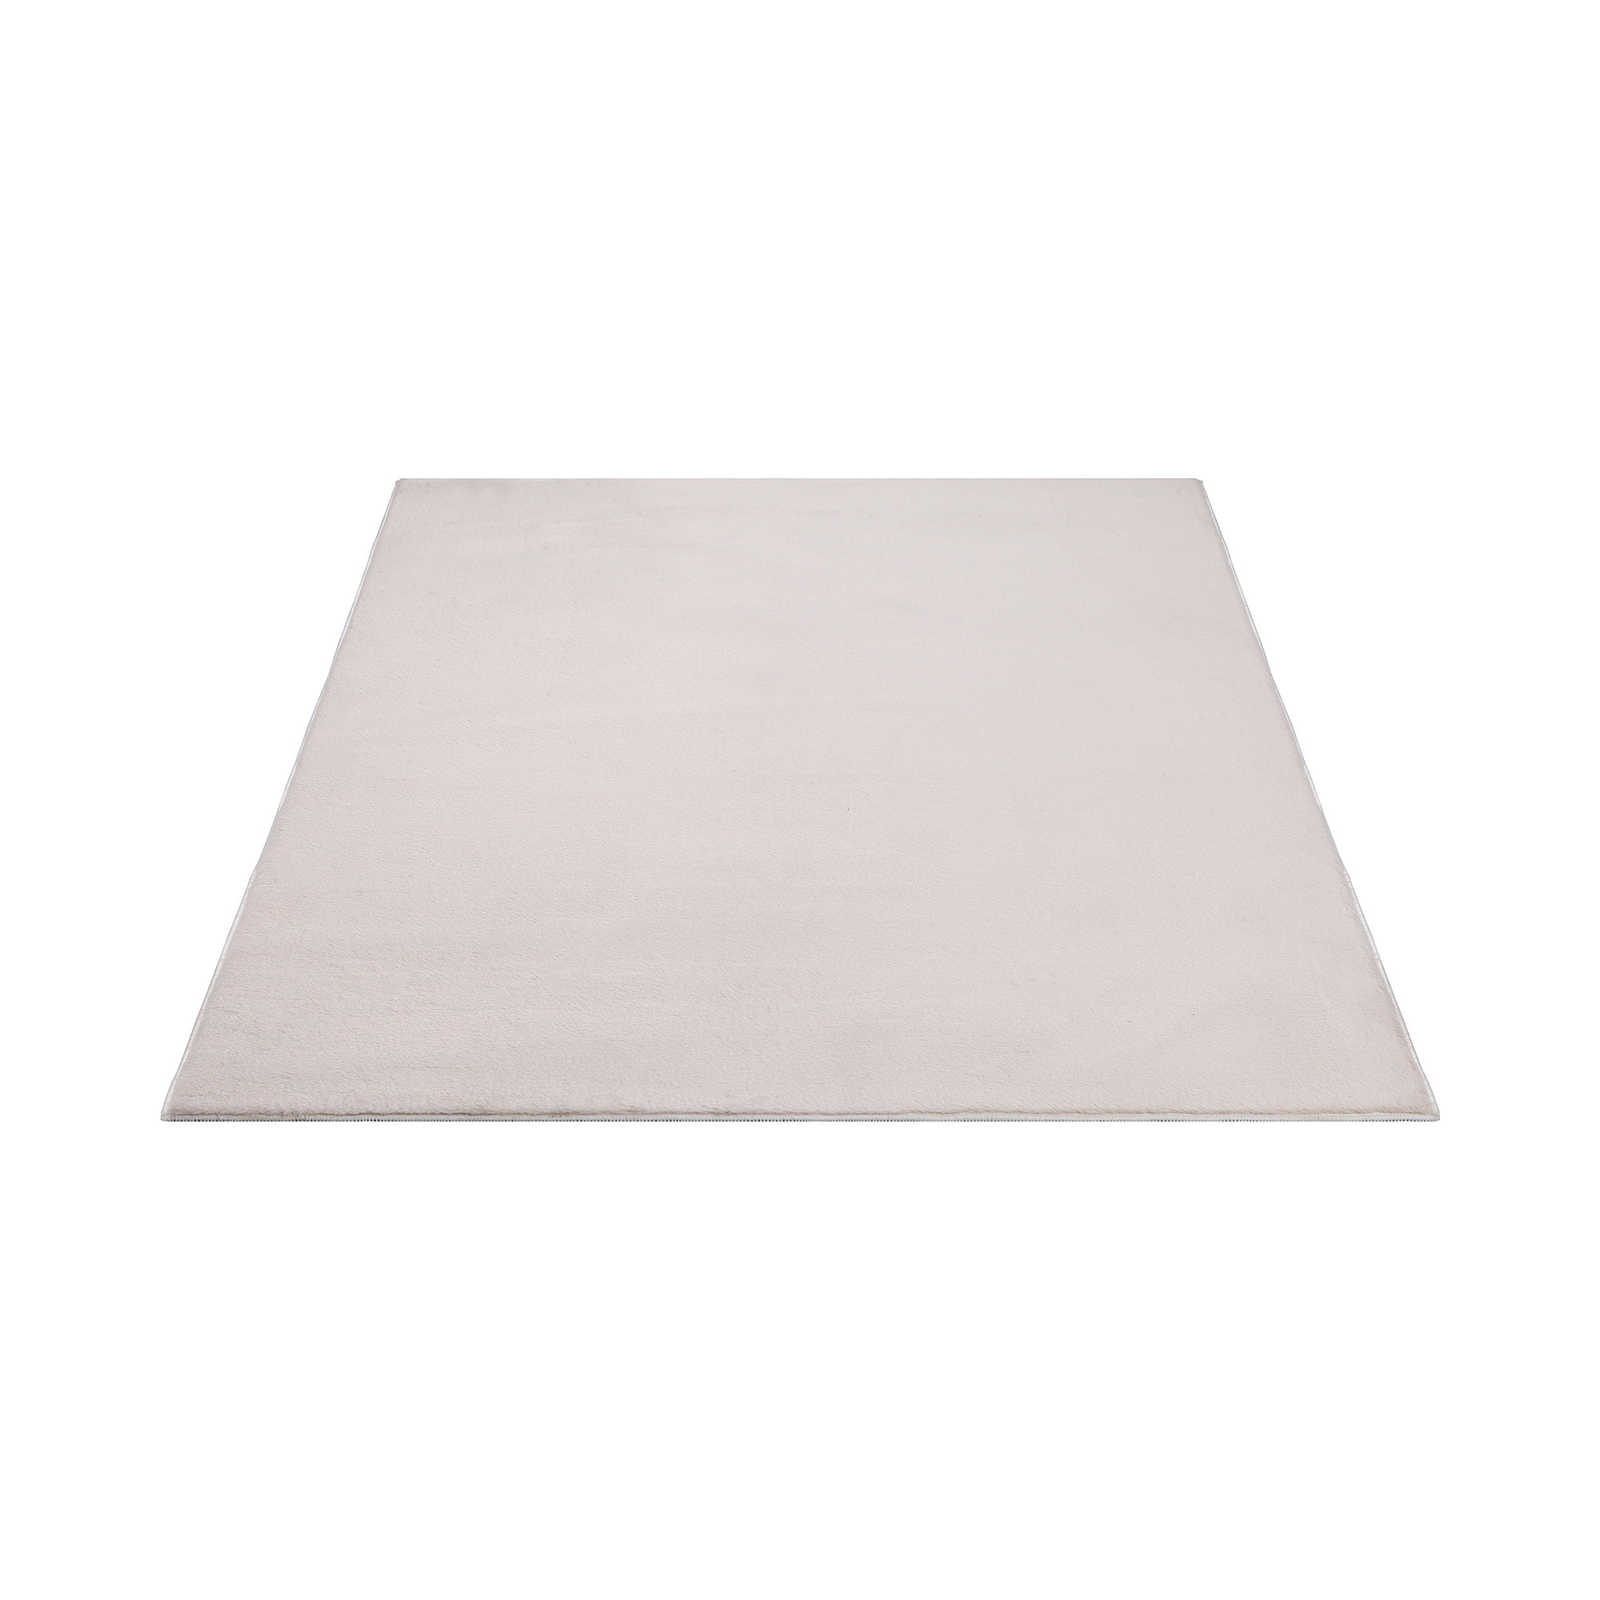 Plain high pile carpet in soft beige - 280 x 200 cm
